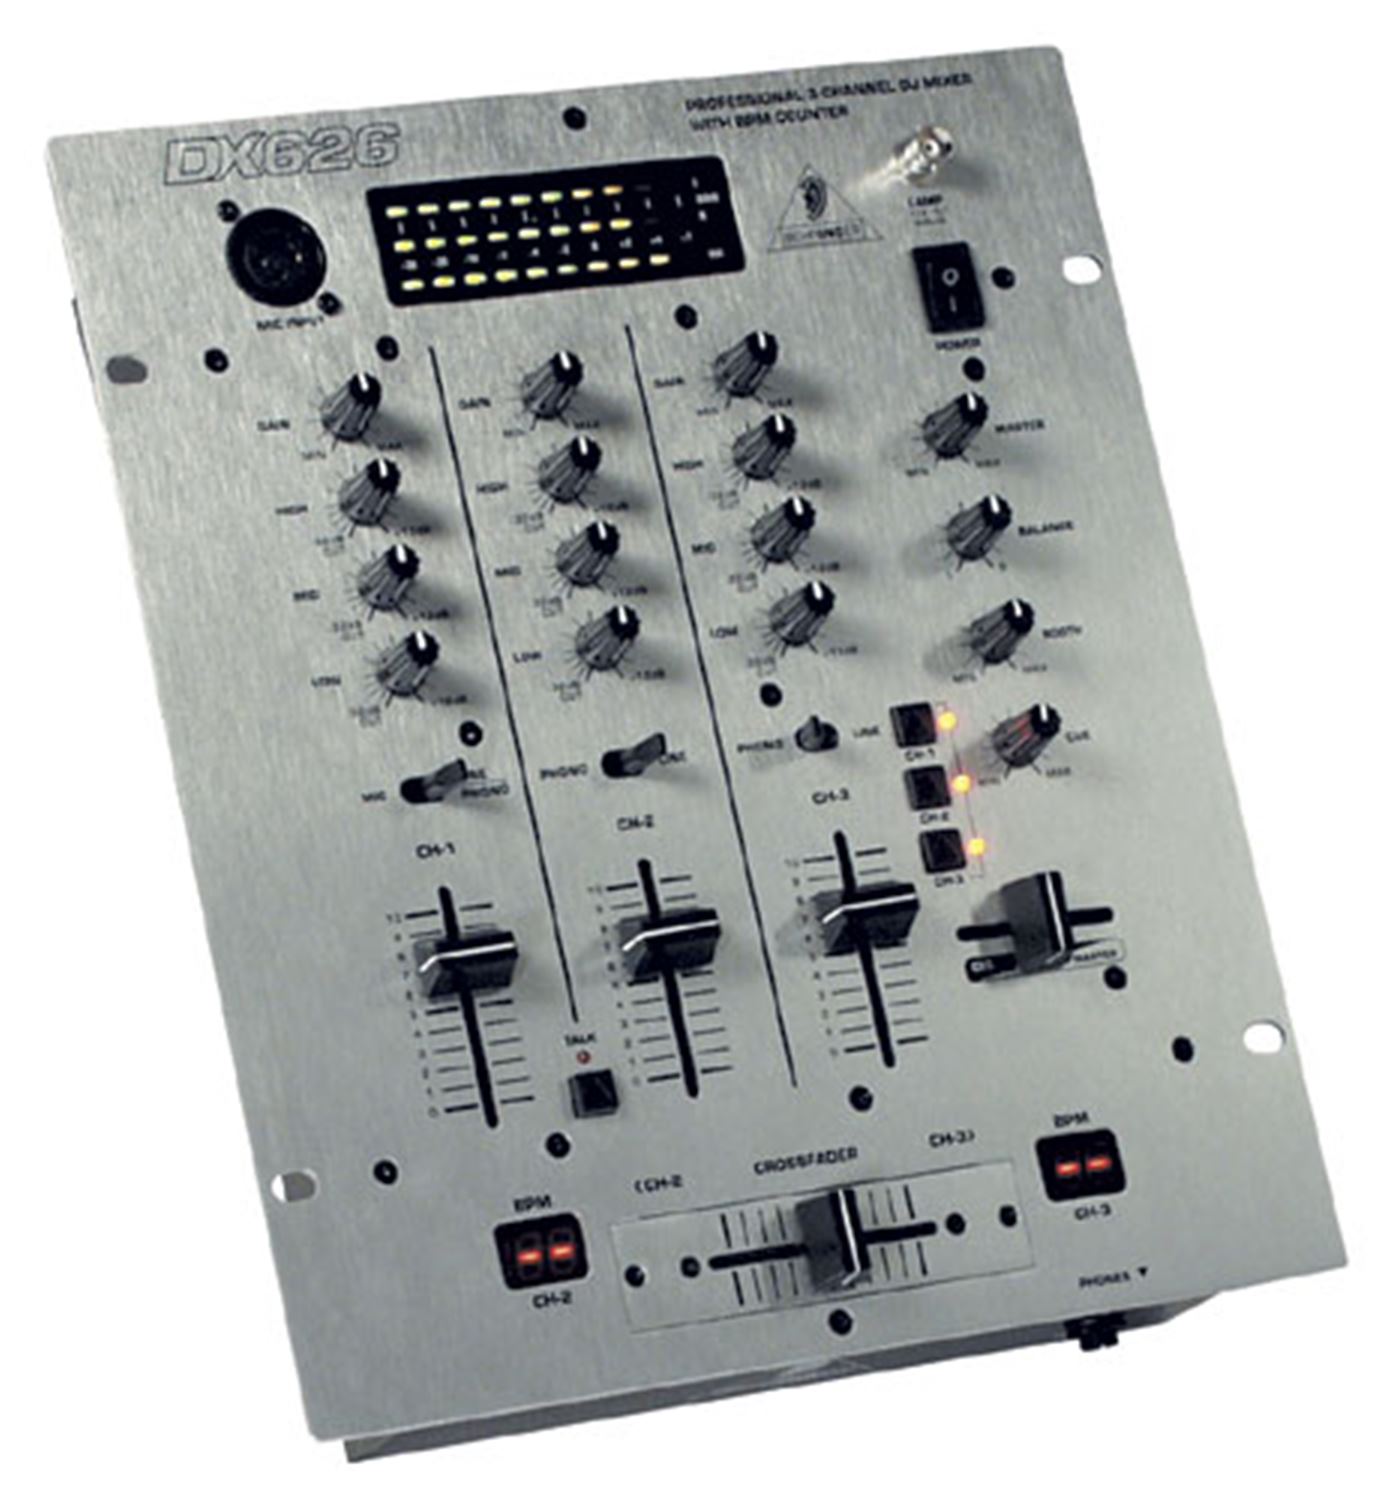 DX626 - Behringer DX626 Audiofanzine